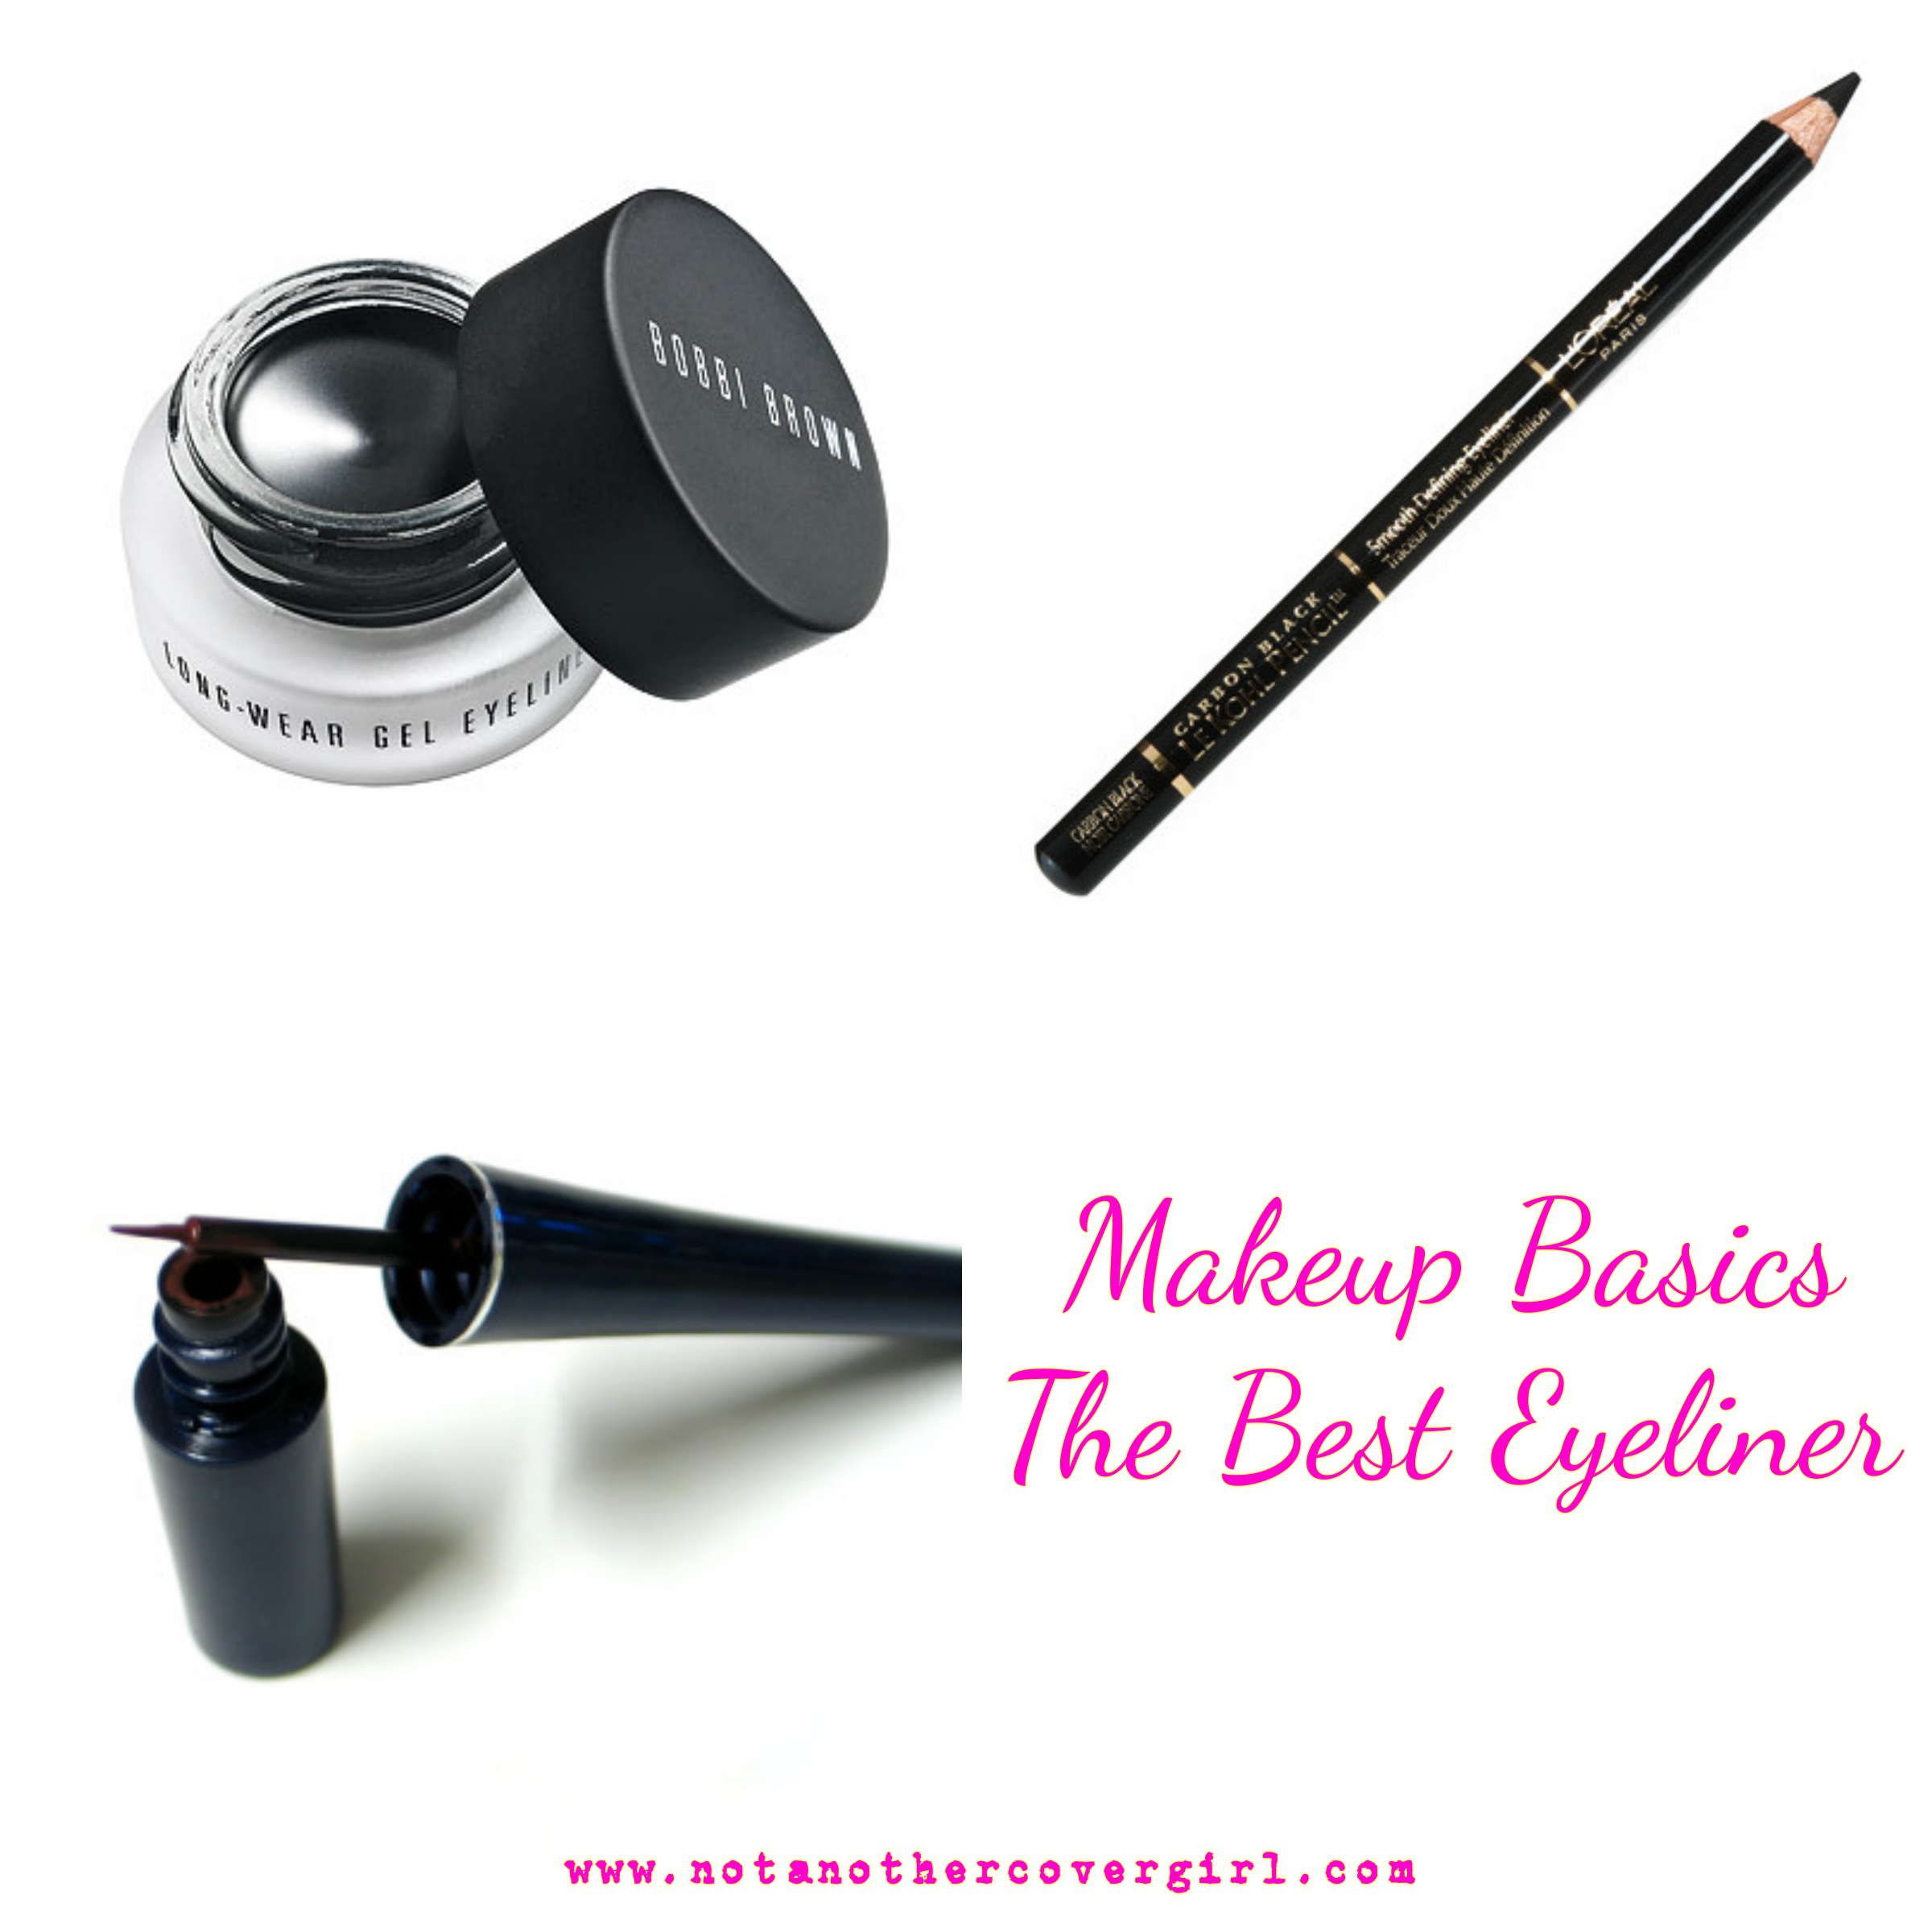 Makeup Basics: What Eyeliner is Best